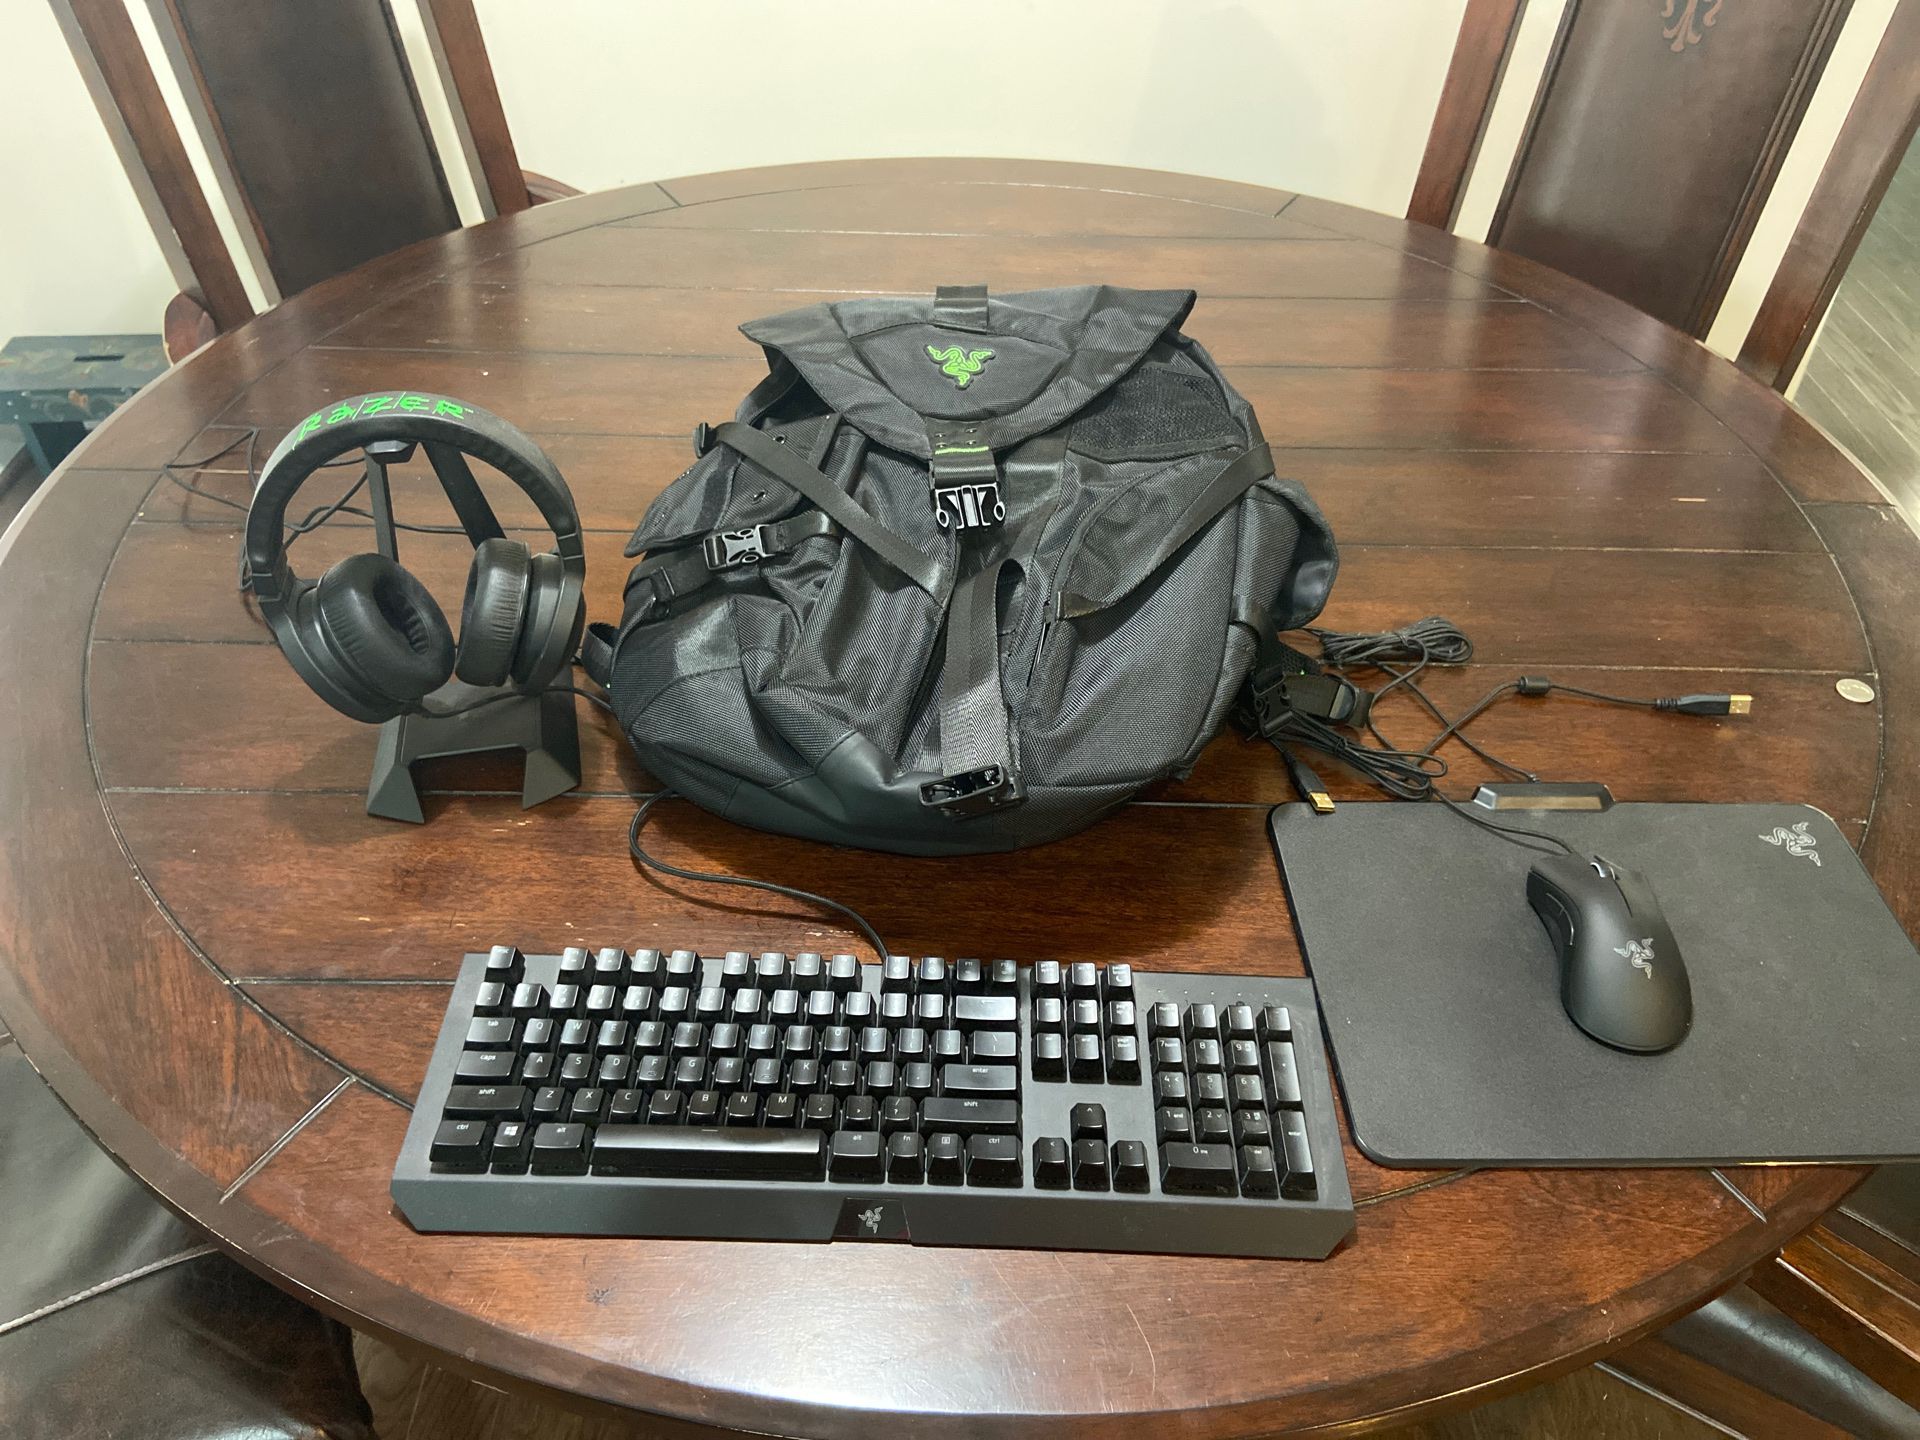 Razer PC/Computer gaming accessories